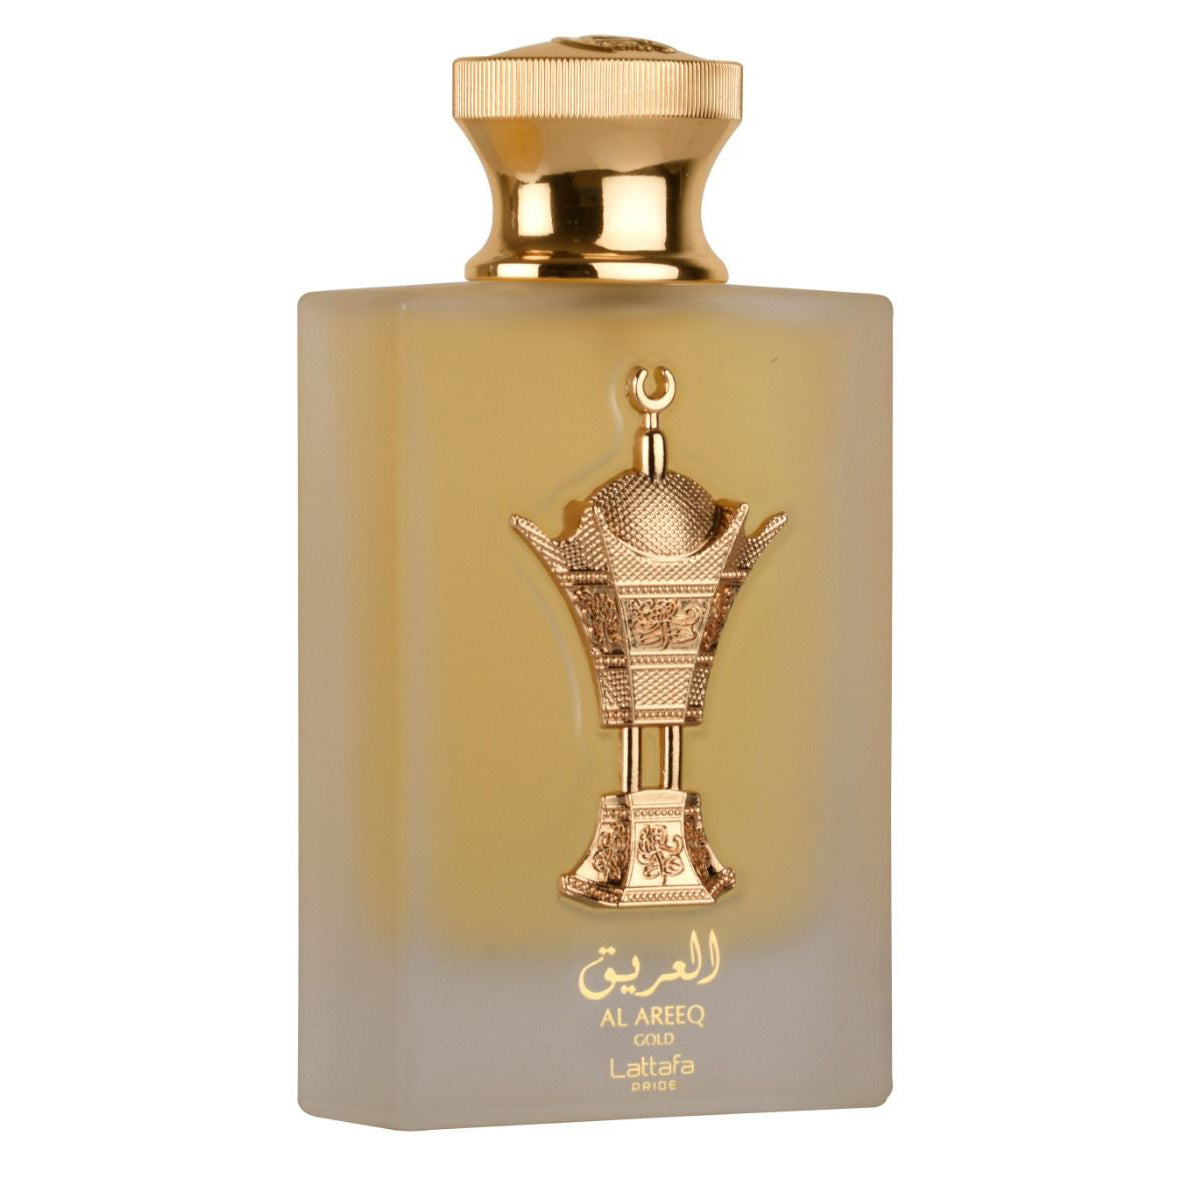 Al Areeq Gold Eau De Parfum 100ml Lattafa Pride-almanaar Islamic Store